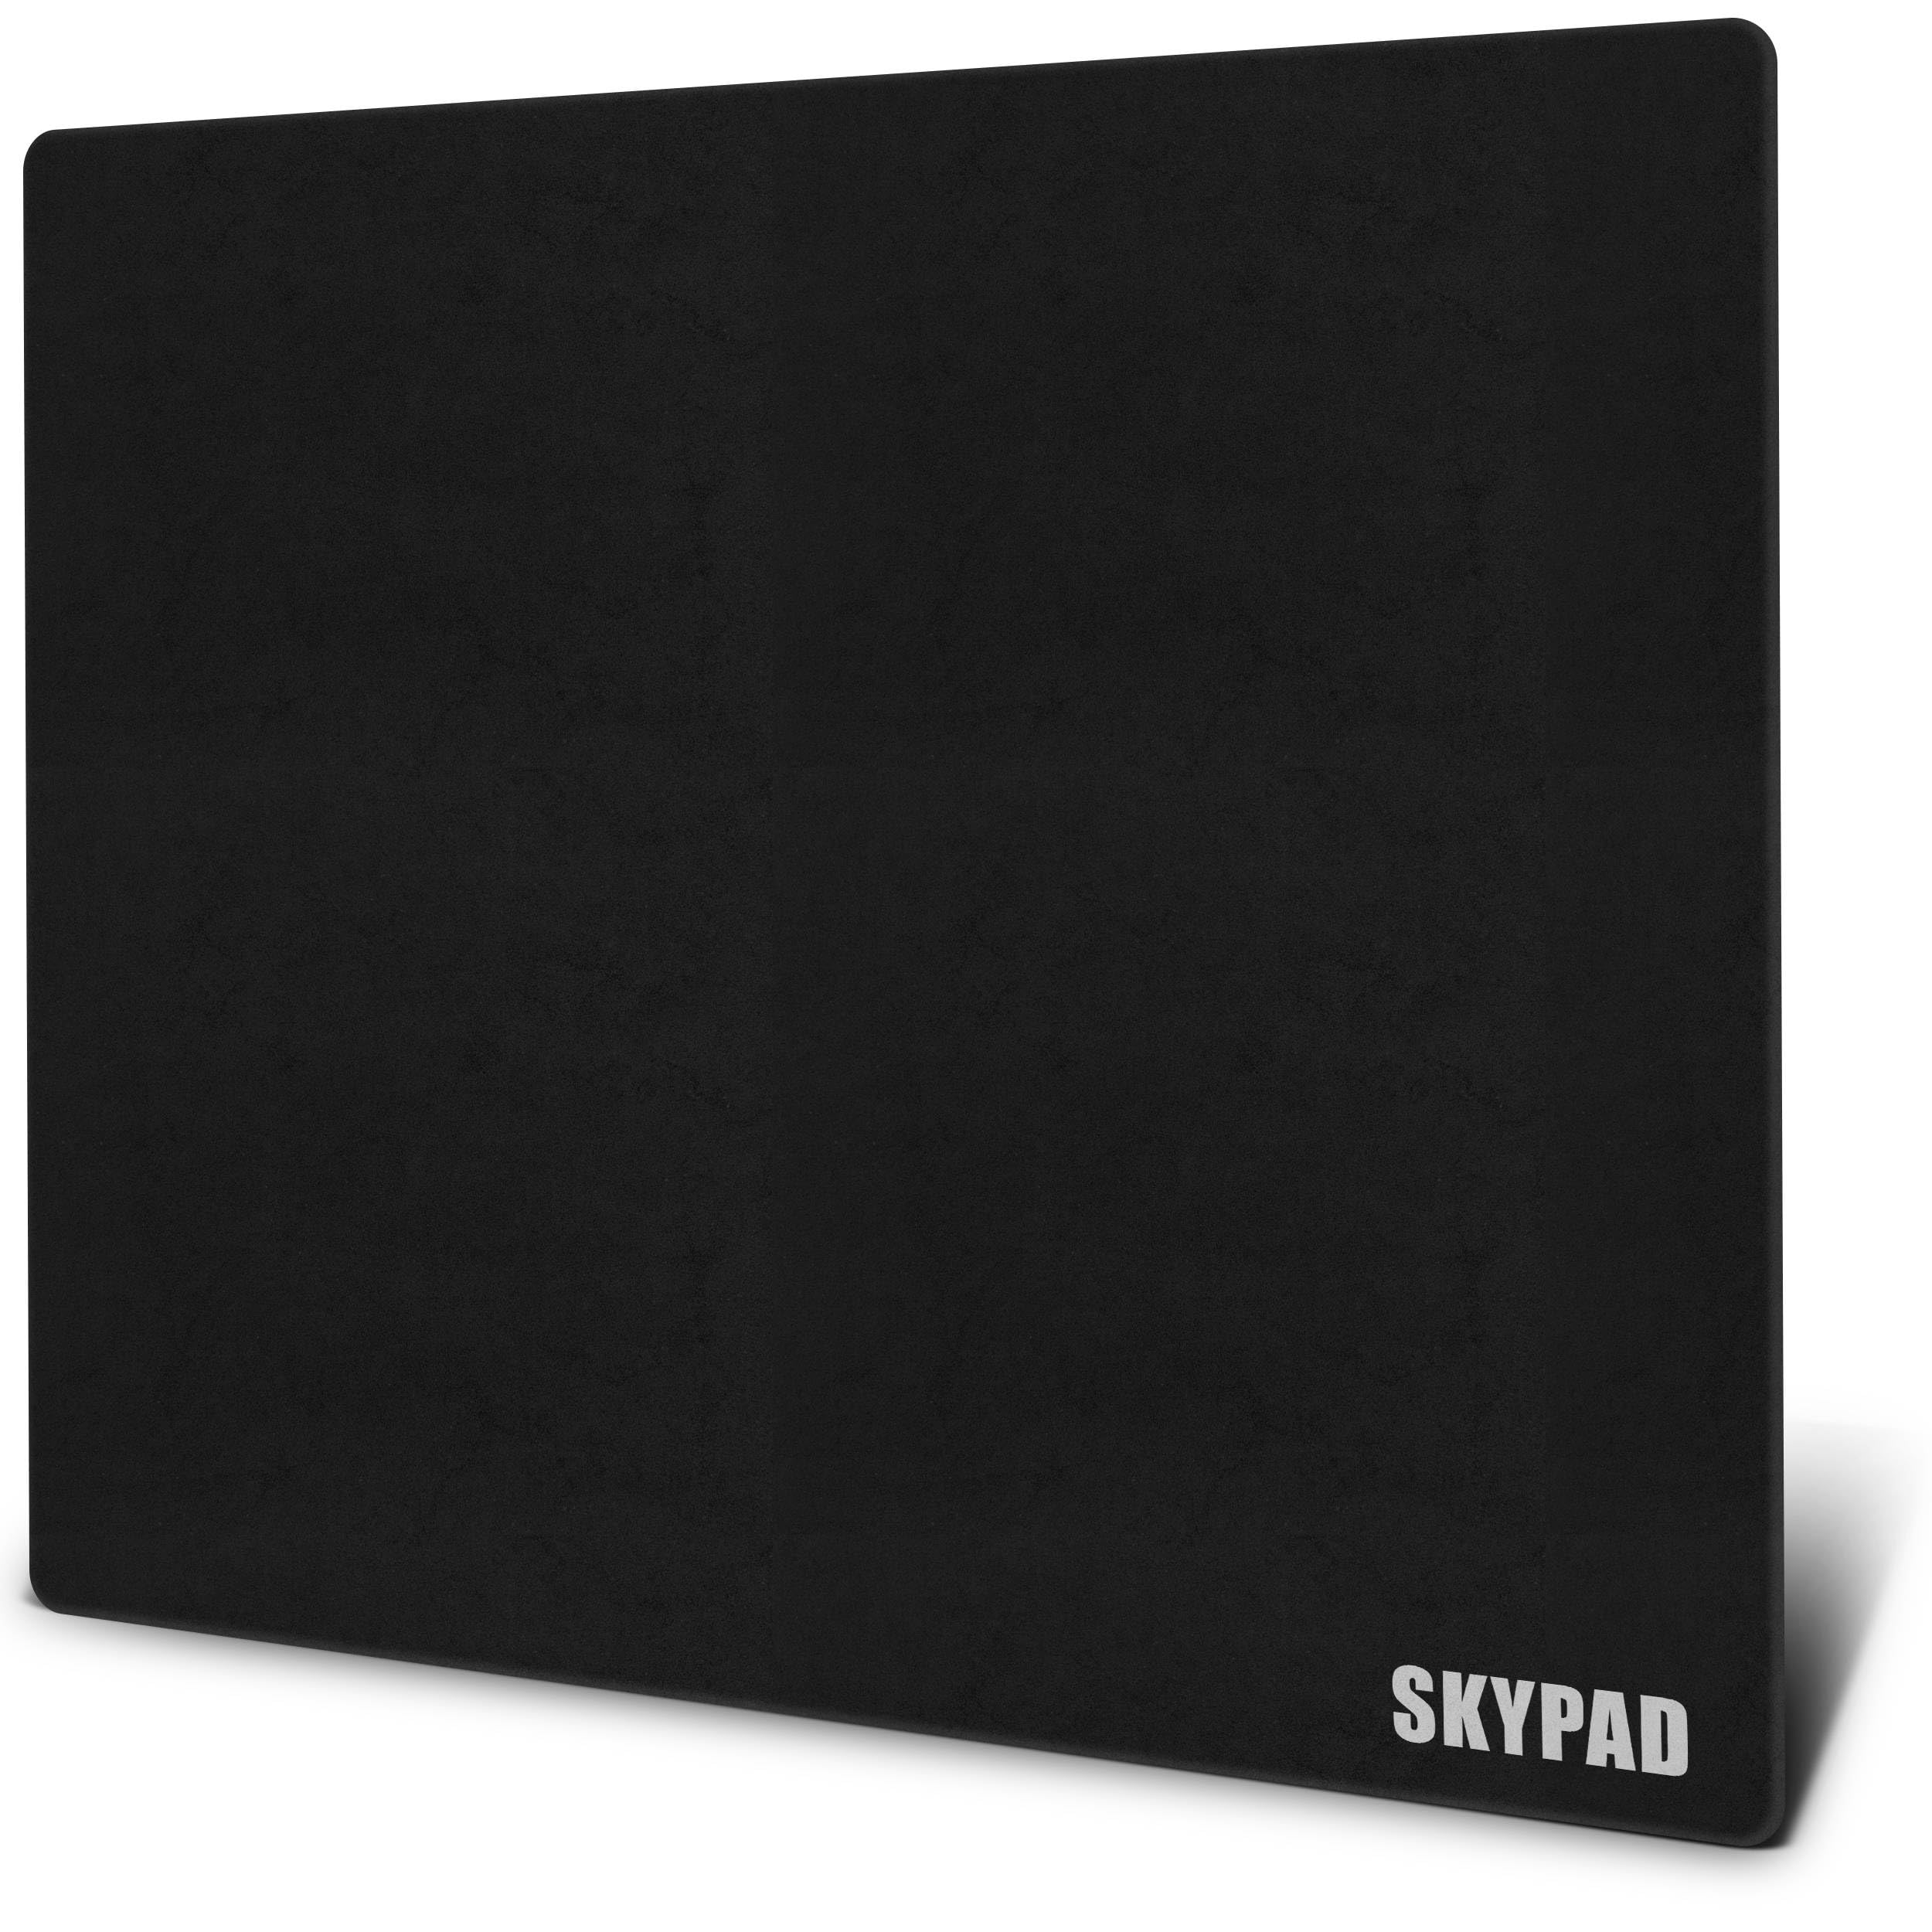 SkyPAD x Sora Edition Live Wallpaper | 1920x1080 - Rare Gallery HD Live  Wallpapers